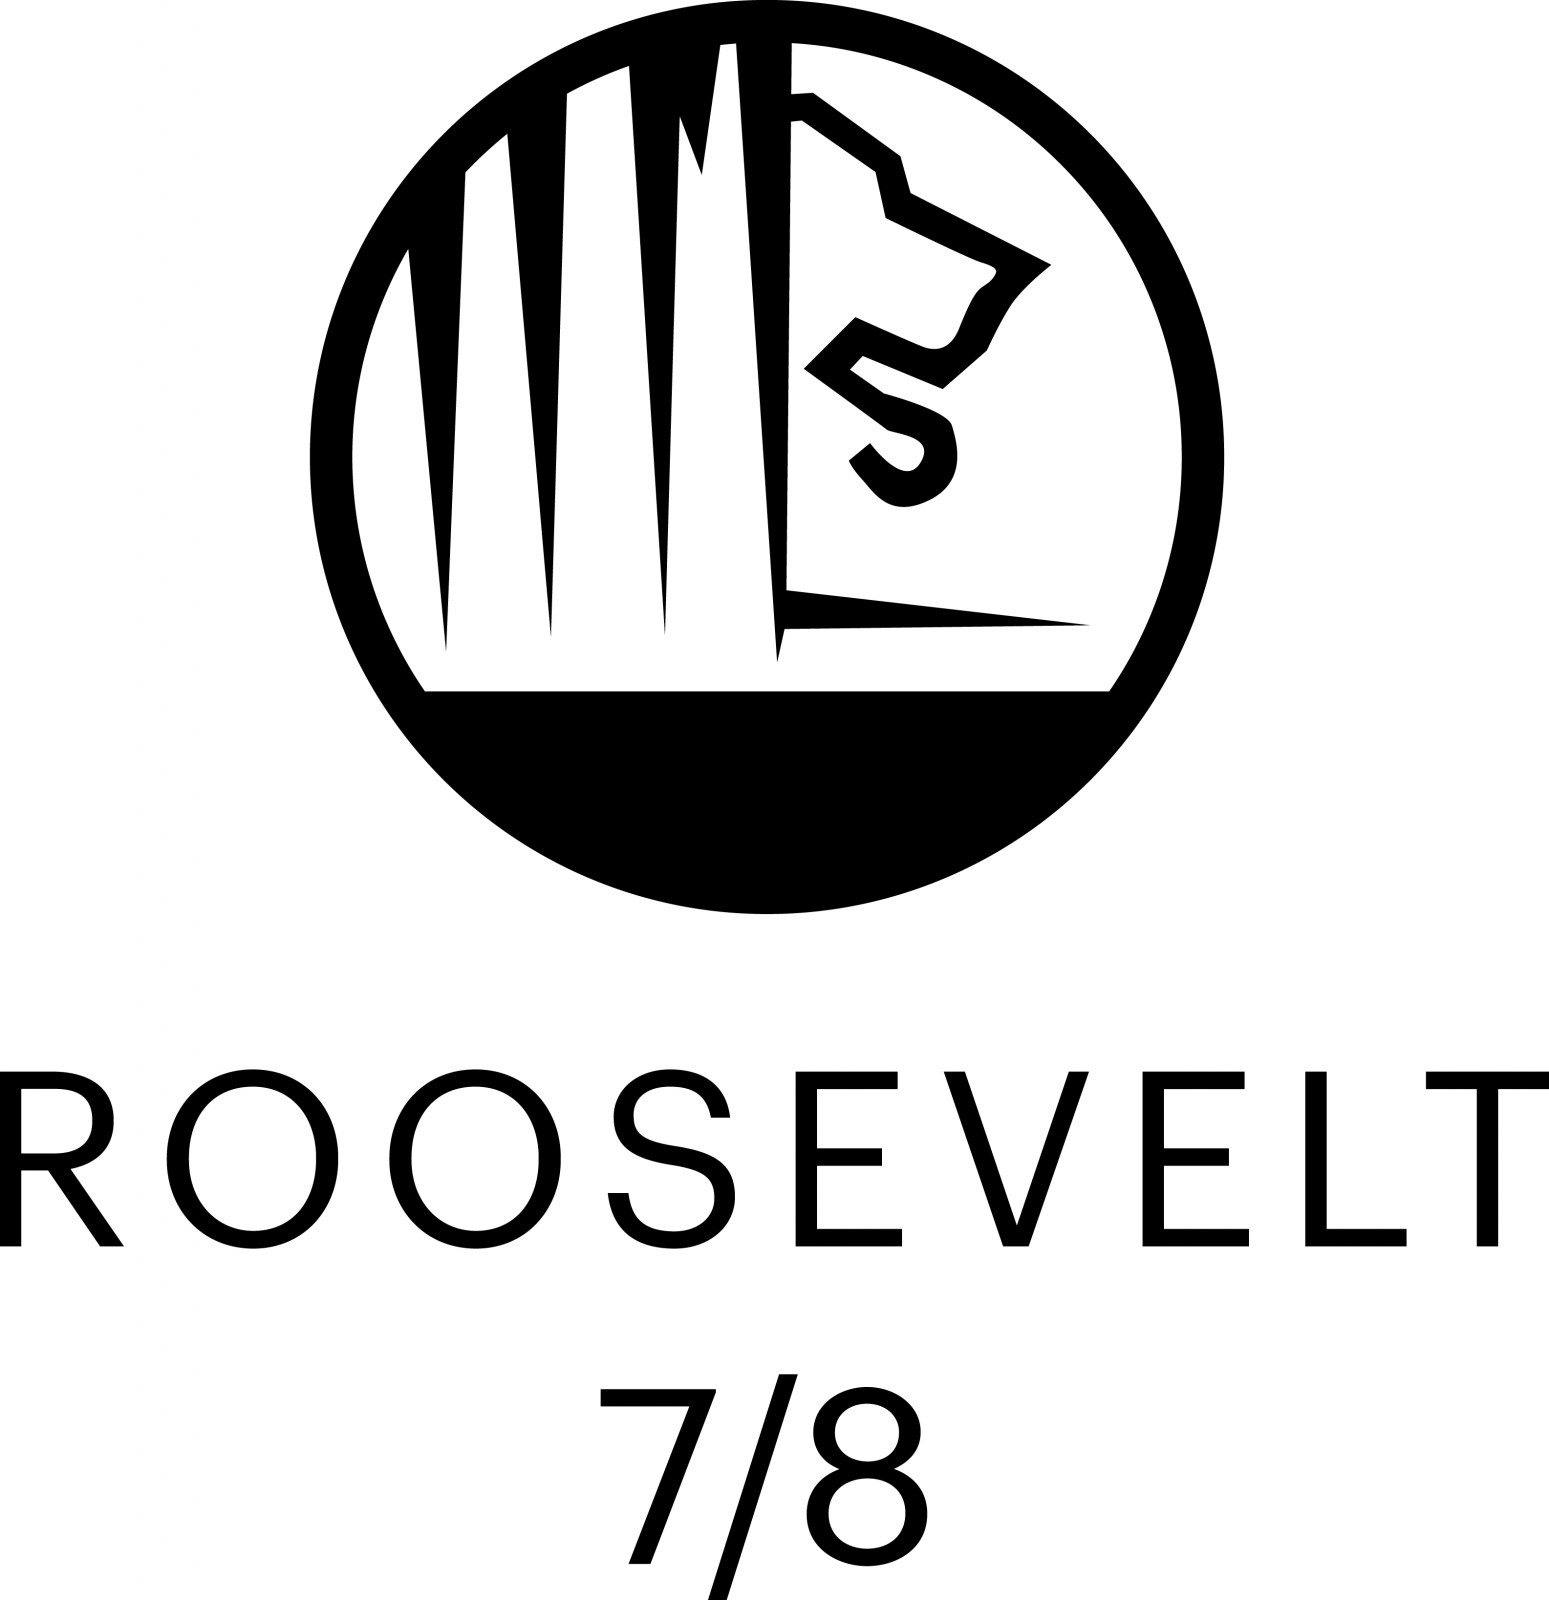 Roosevelt 7/8